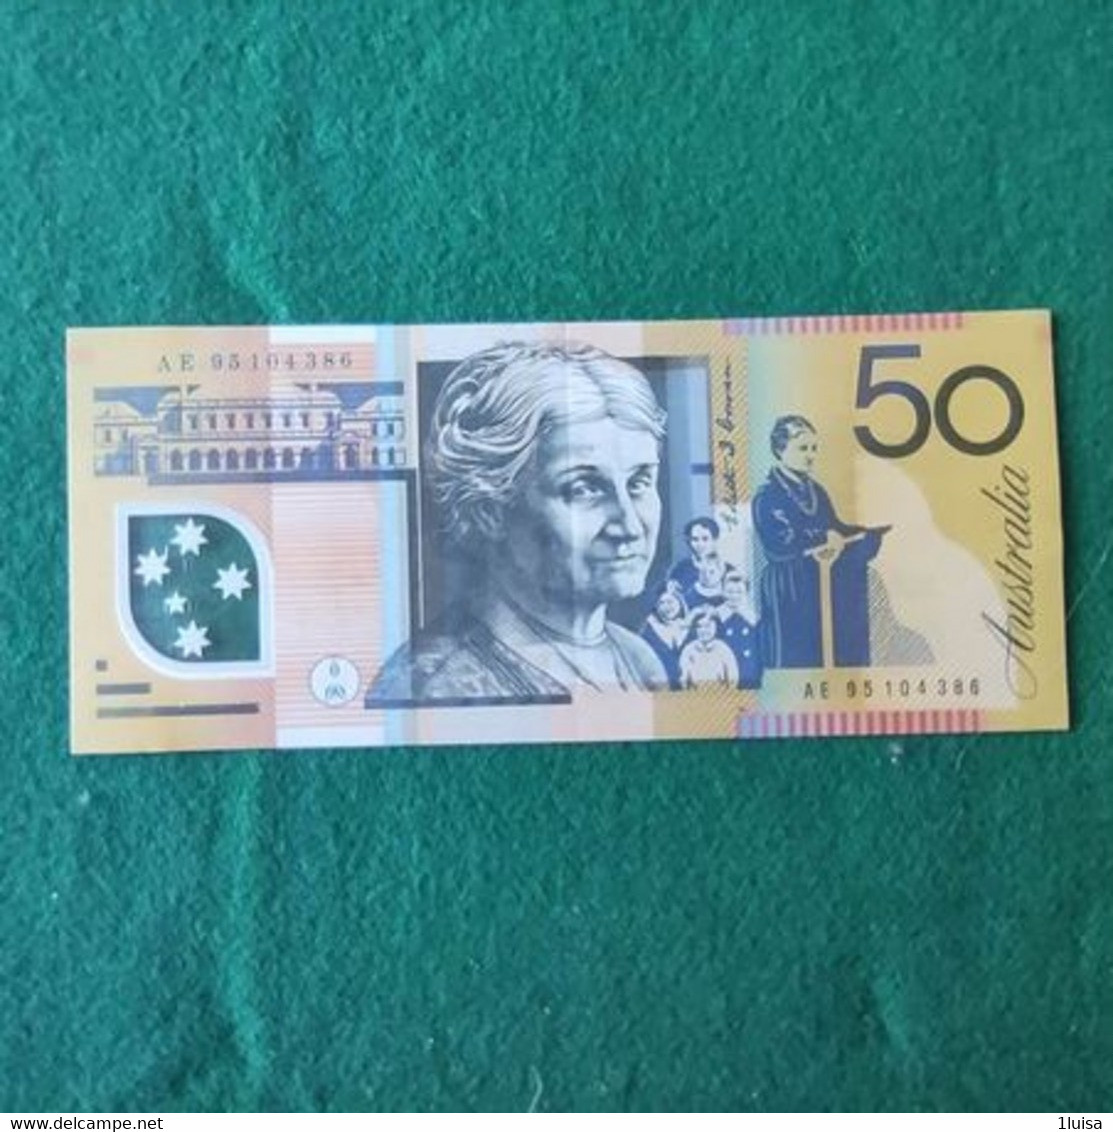 AUSTRALIA 50  Dollars 2009 - 1988 (10$ Polymer)